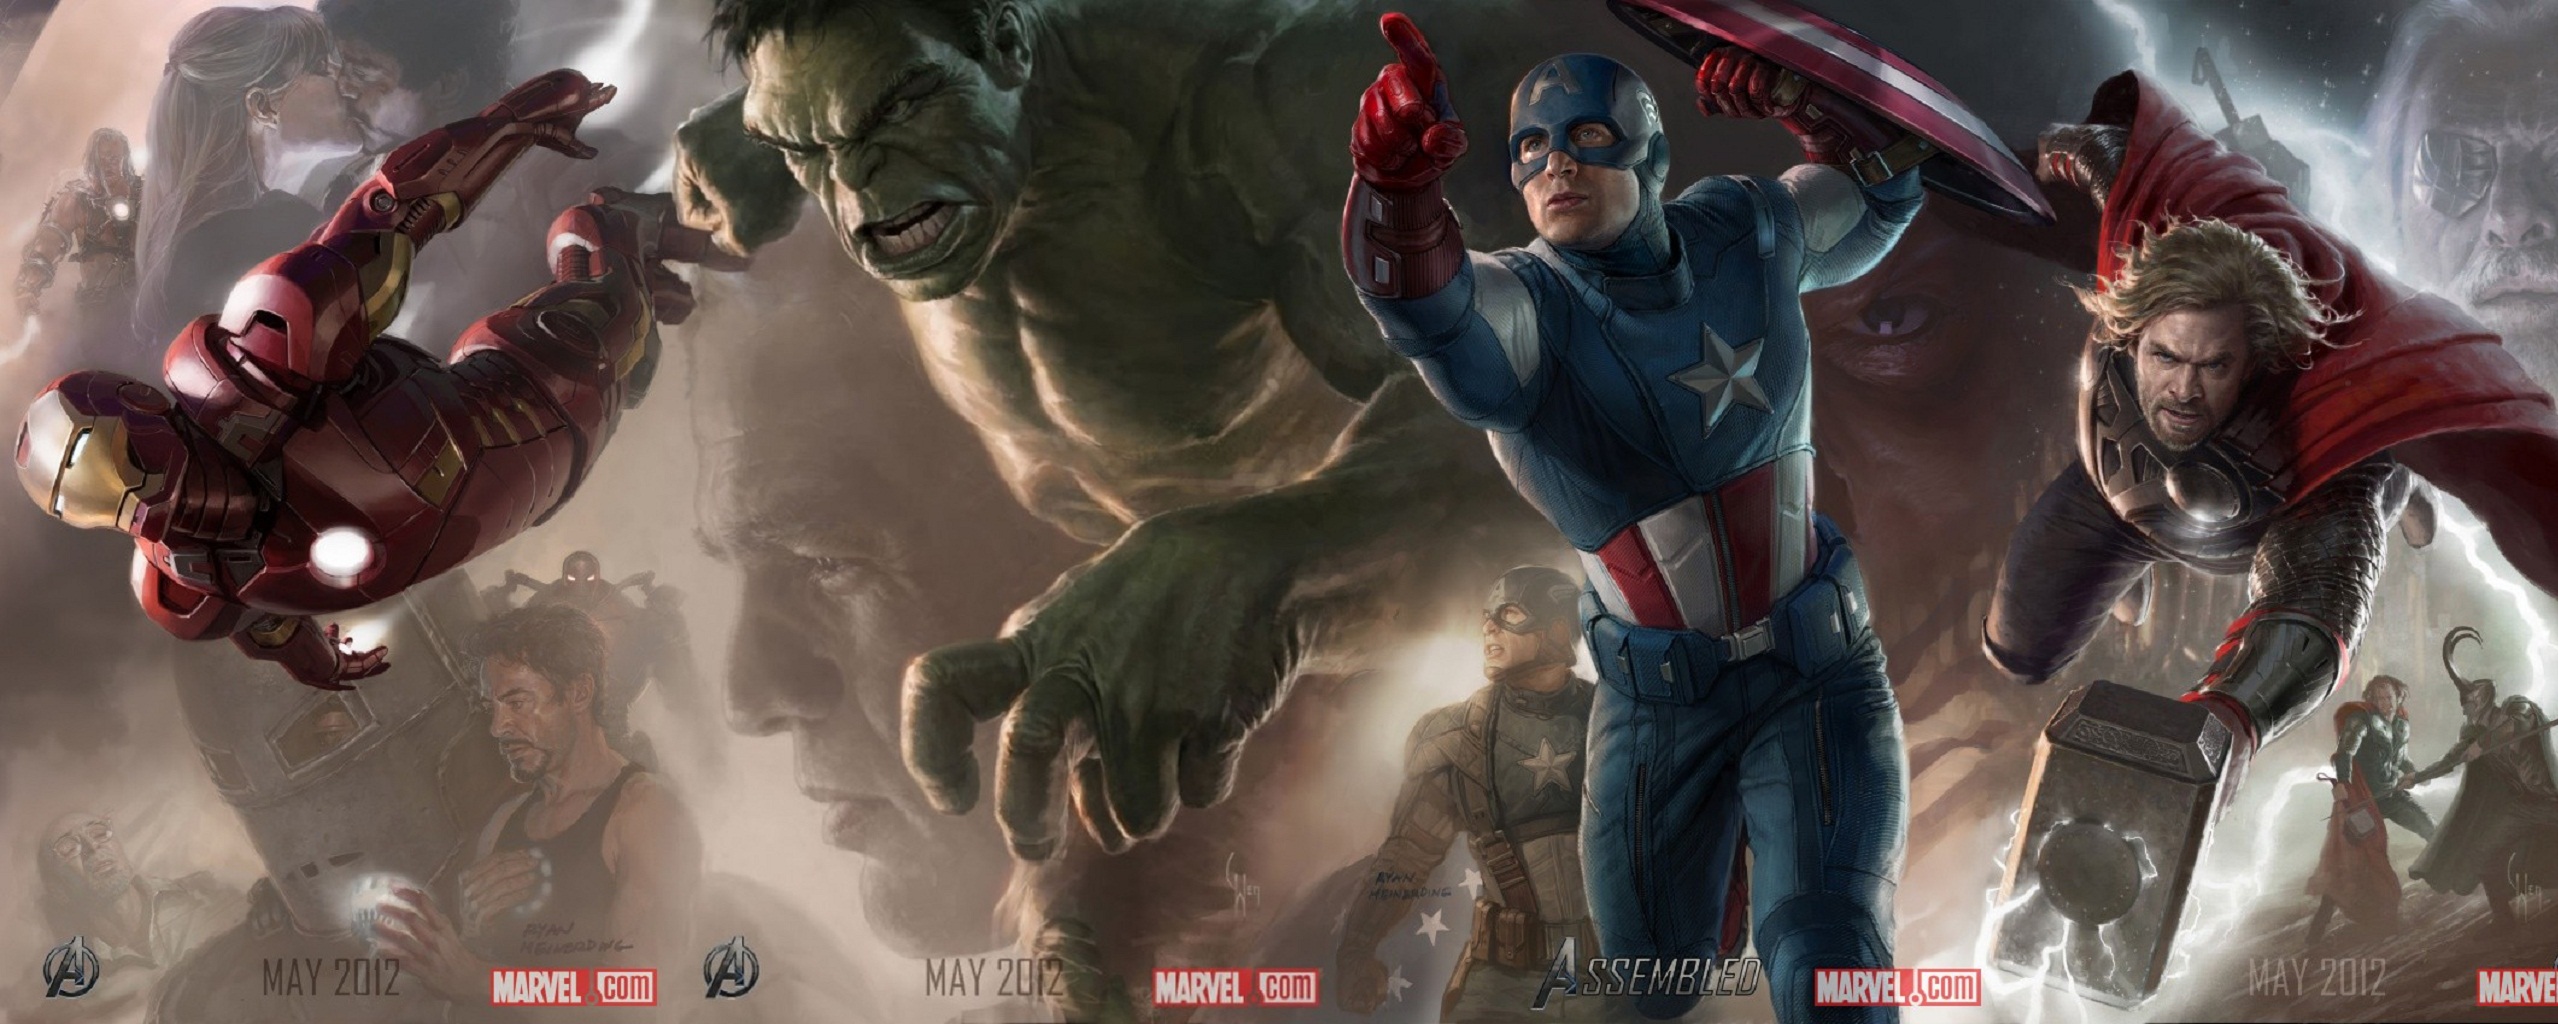 The Avengers Core 2012 featuring Black Widow, Iron Man, Hulk, Captain America, Thor, Hawkeye, and Nick Fury.